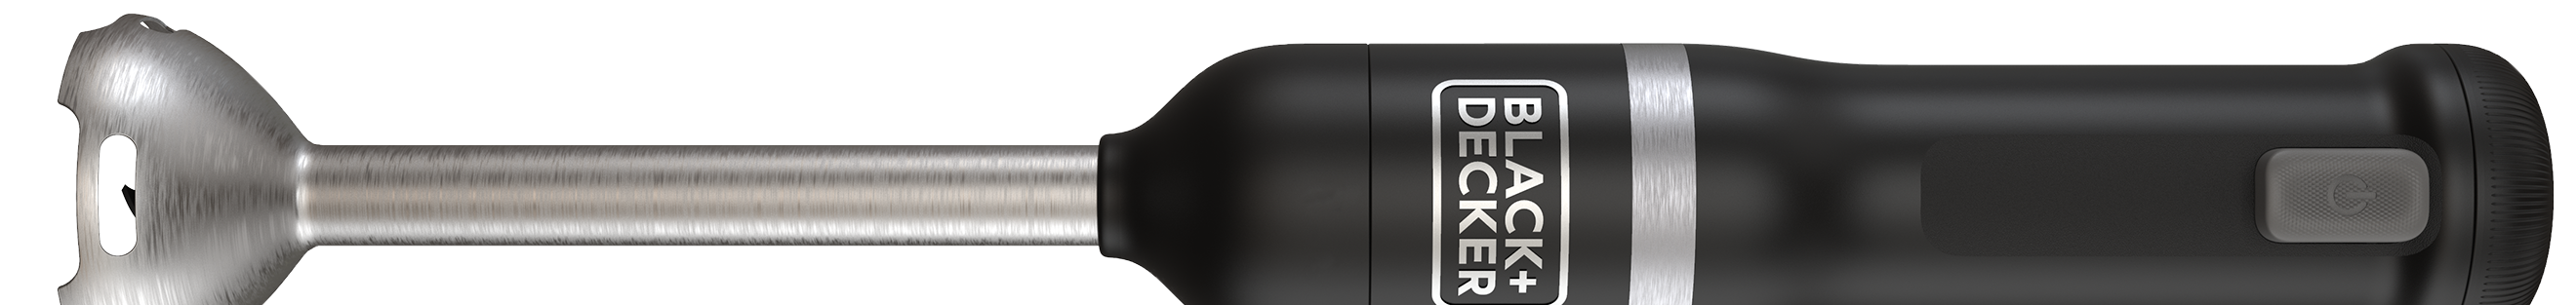 Black & Decker BCKM1011K10 Kitchen Wand Variable Speed Lithium-Ion Cordless Black Immersion Blender Kit